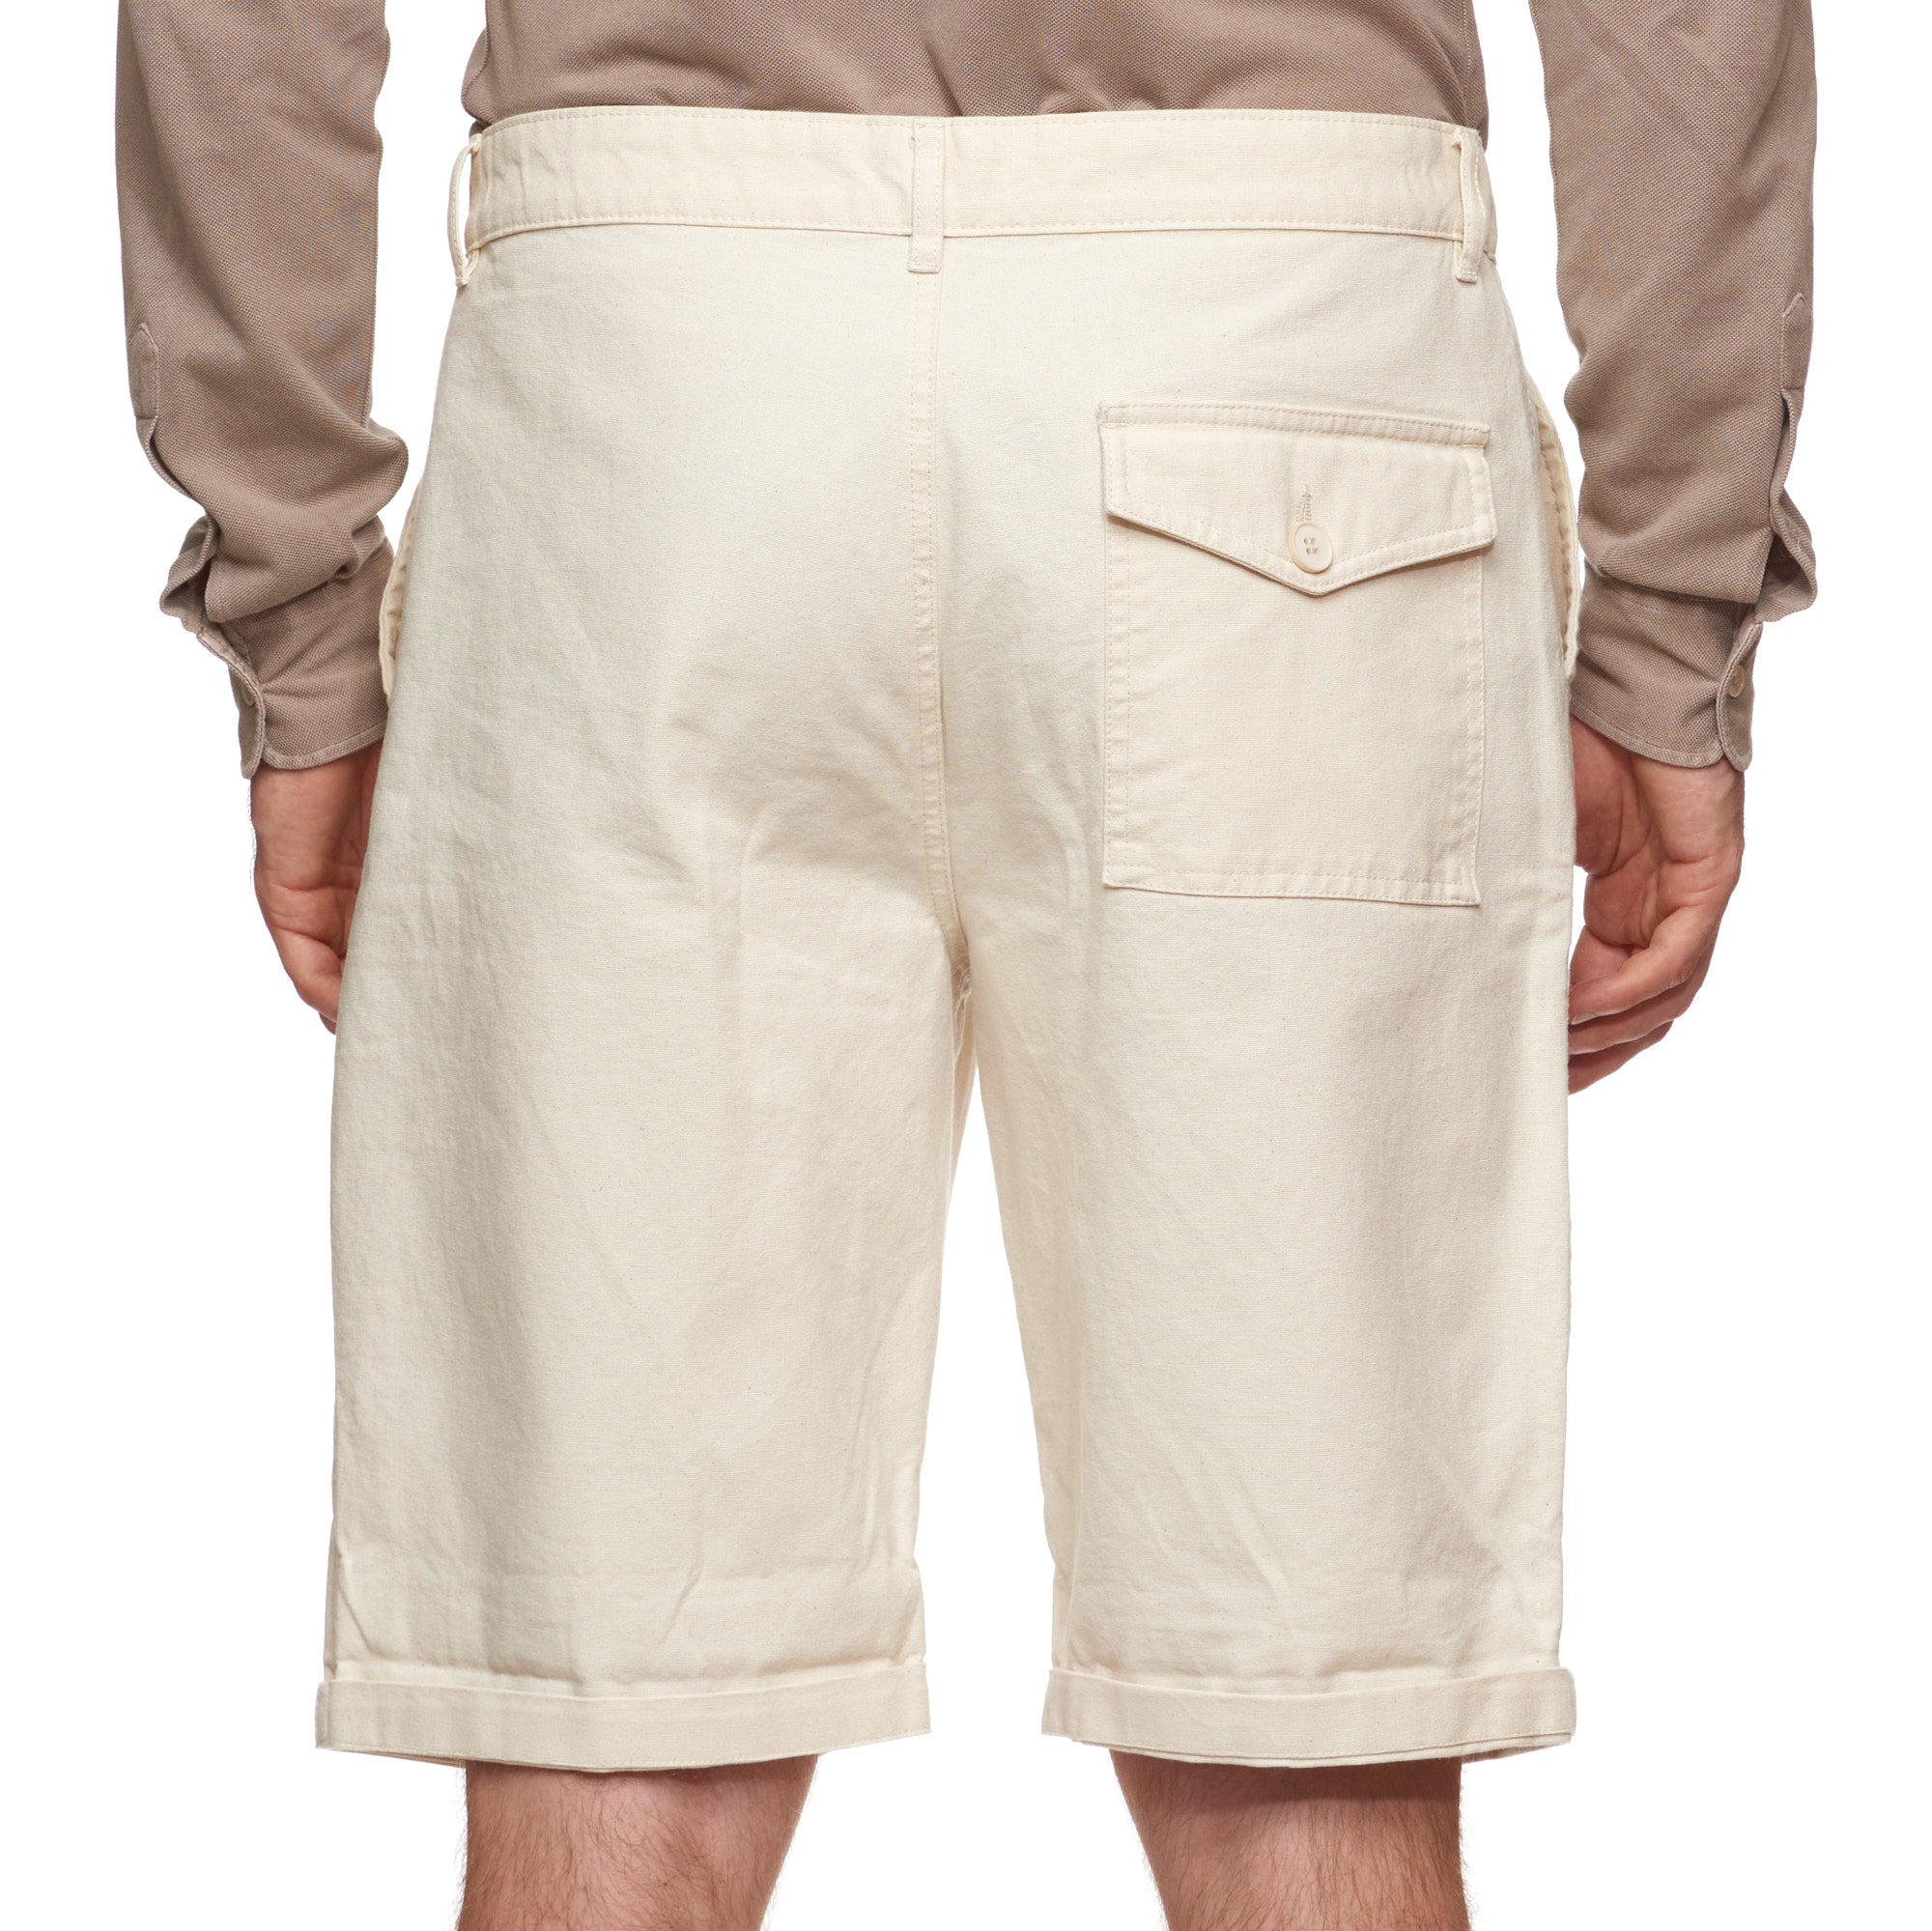 ARMOR LUX Beige Cotton Bermuda Shorts FR 44 US 34 ARMOR LUX